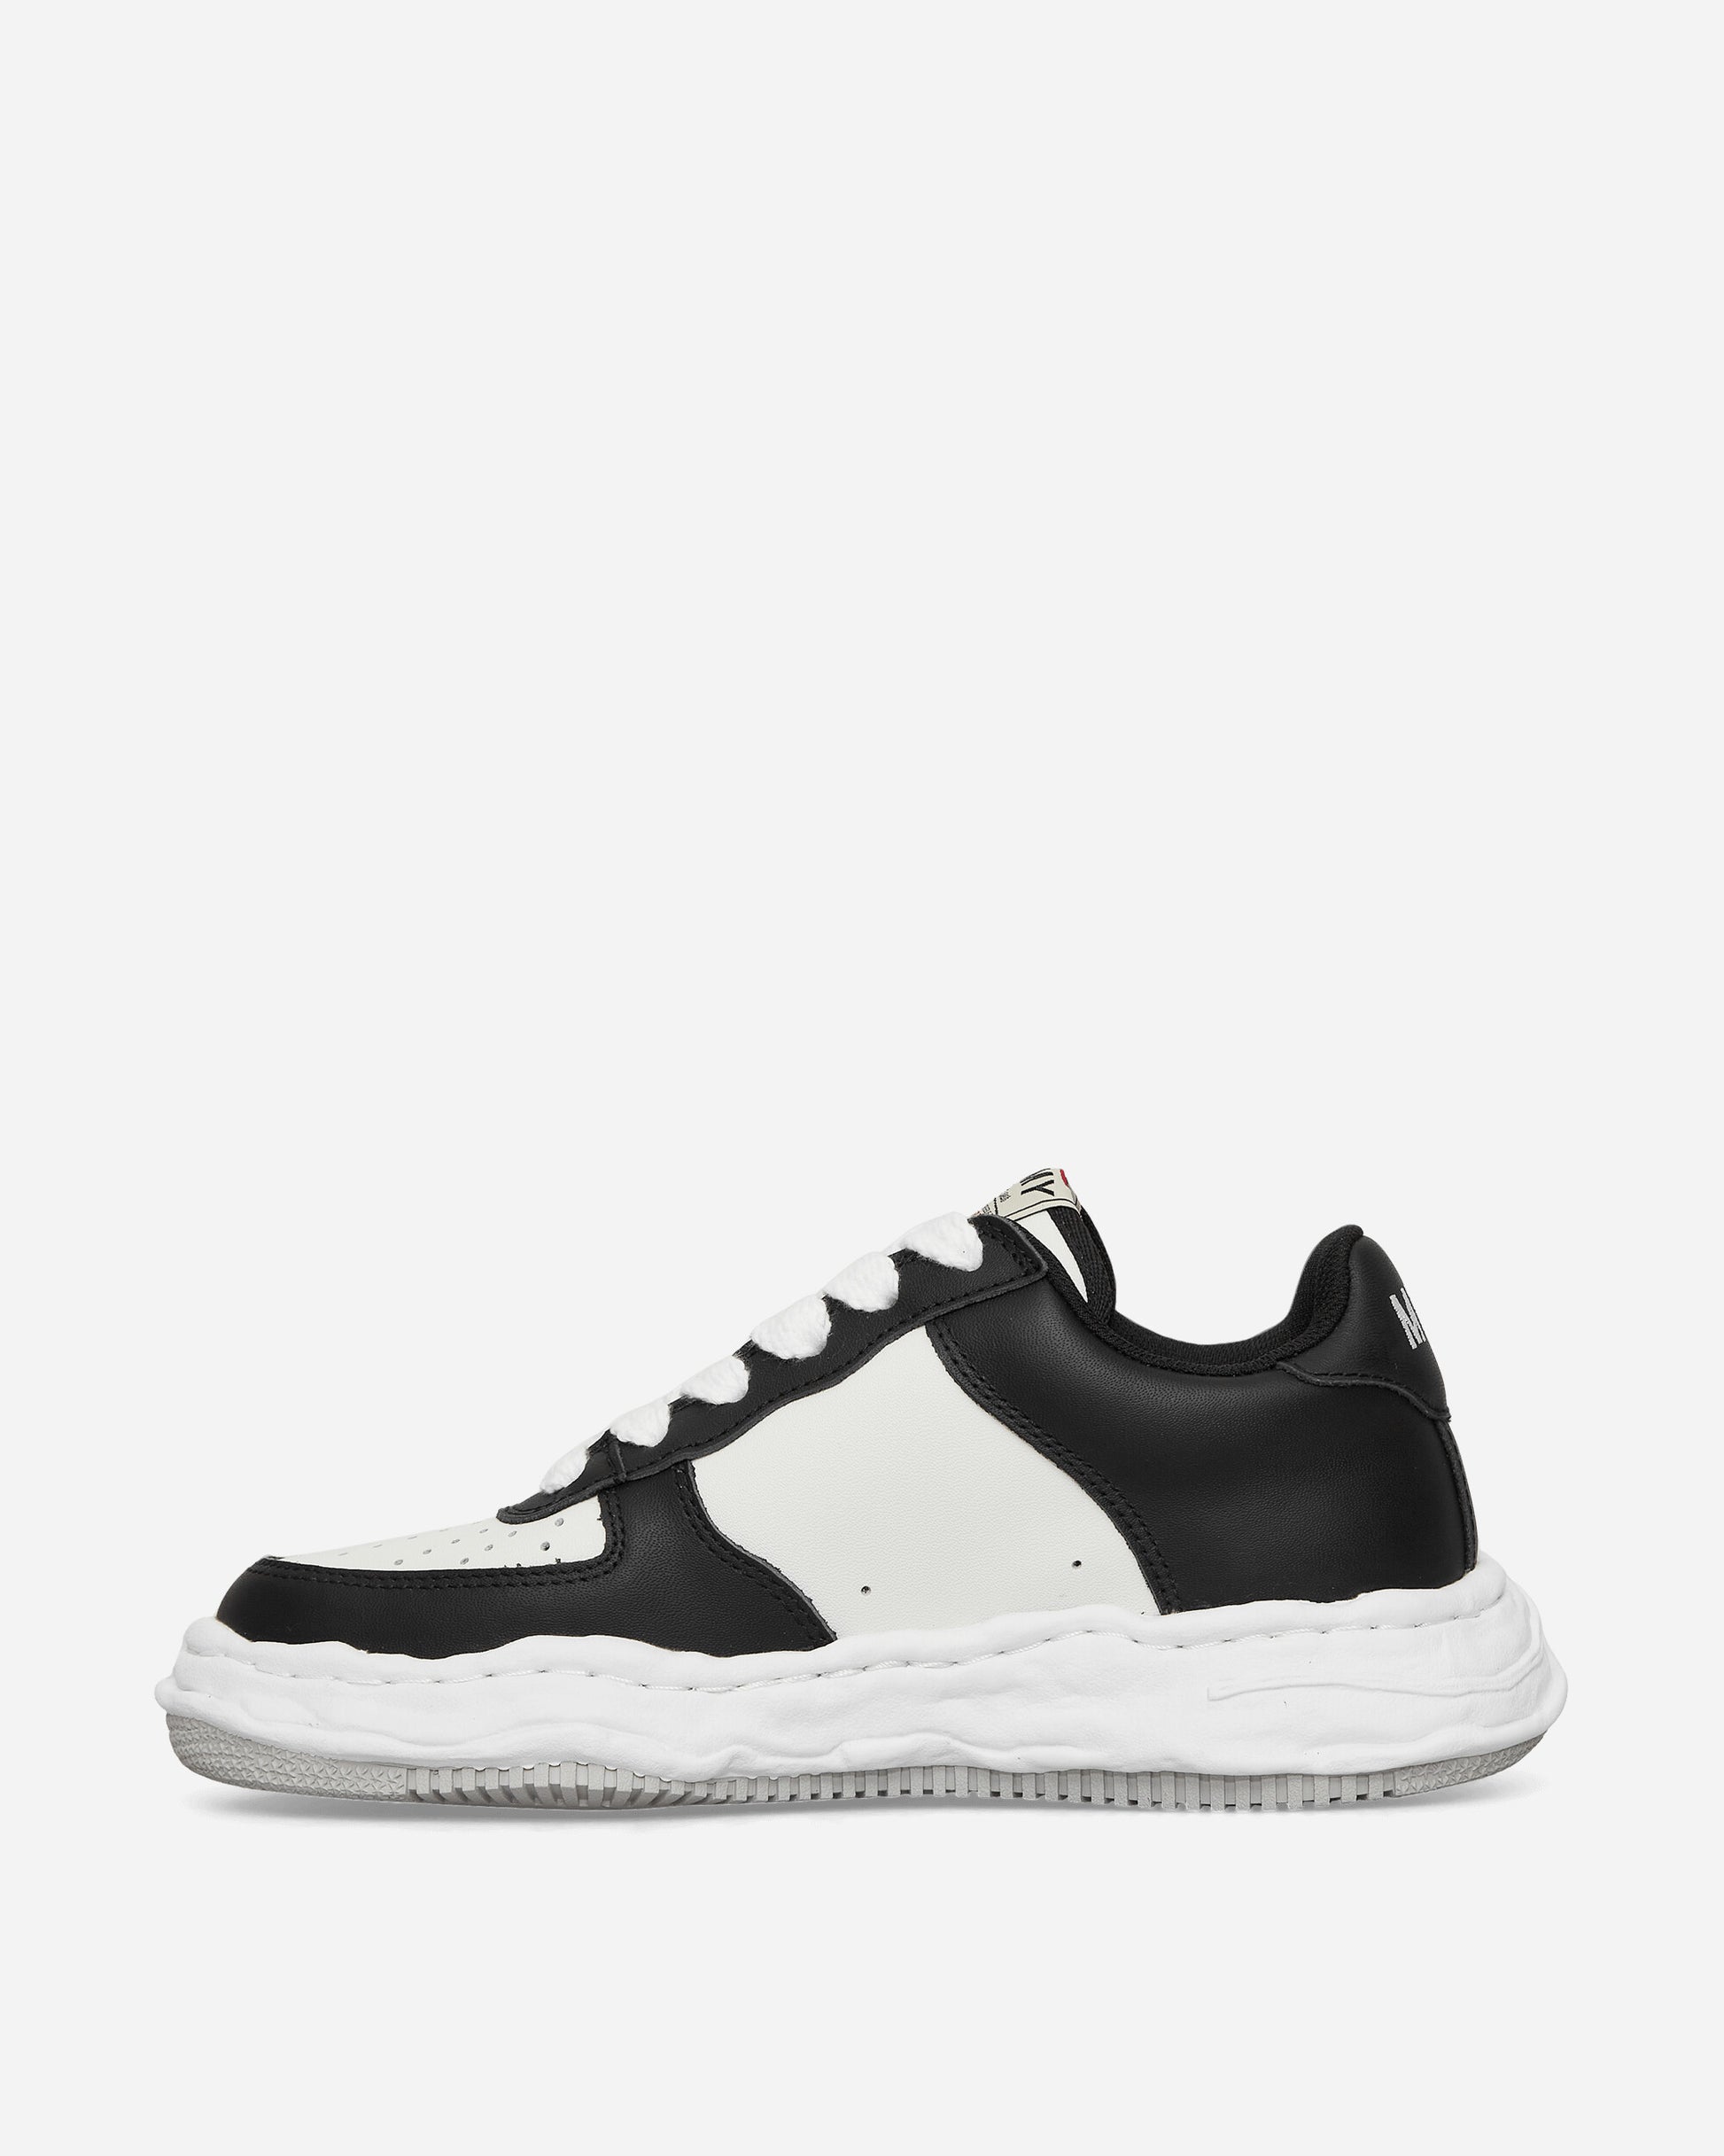 Maison MIHARA YASUHIRO Wayne Low/Original Sole Cow Leather Low-Top Sneaker Black/White Sneakers Low A08FW706 BLACKWHITE